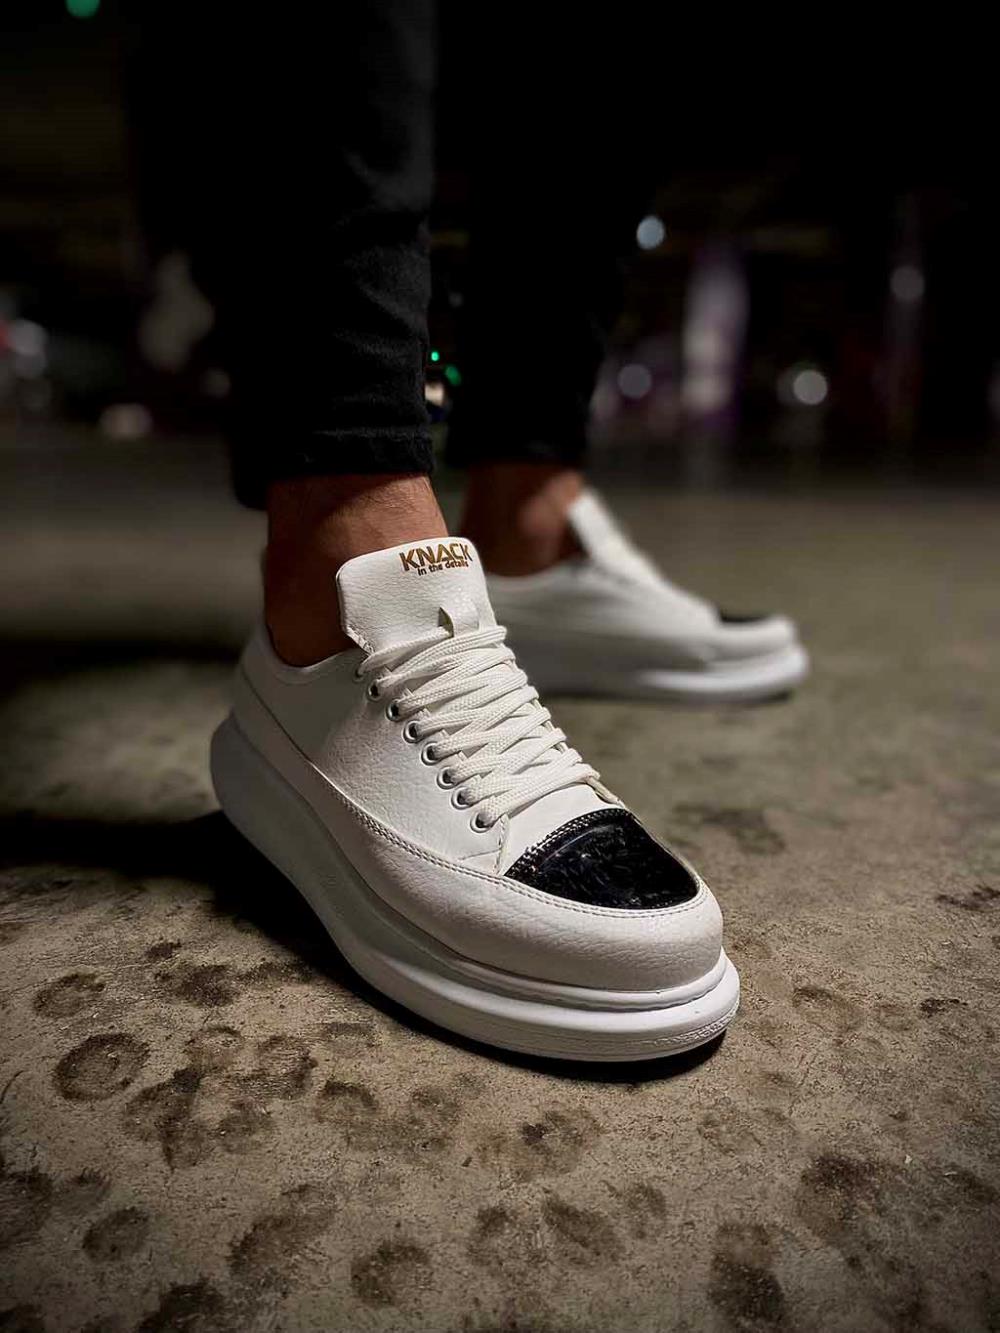 Men's Knack Sneakers Shoes 813 White - STREETMODE™